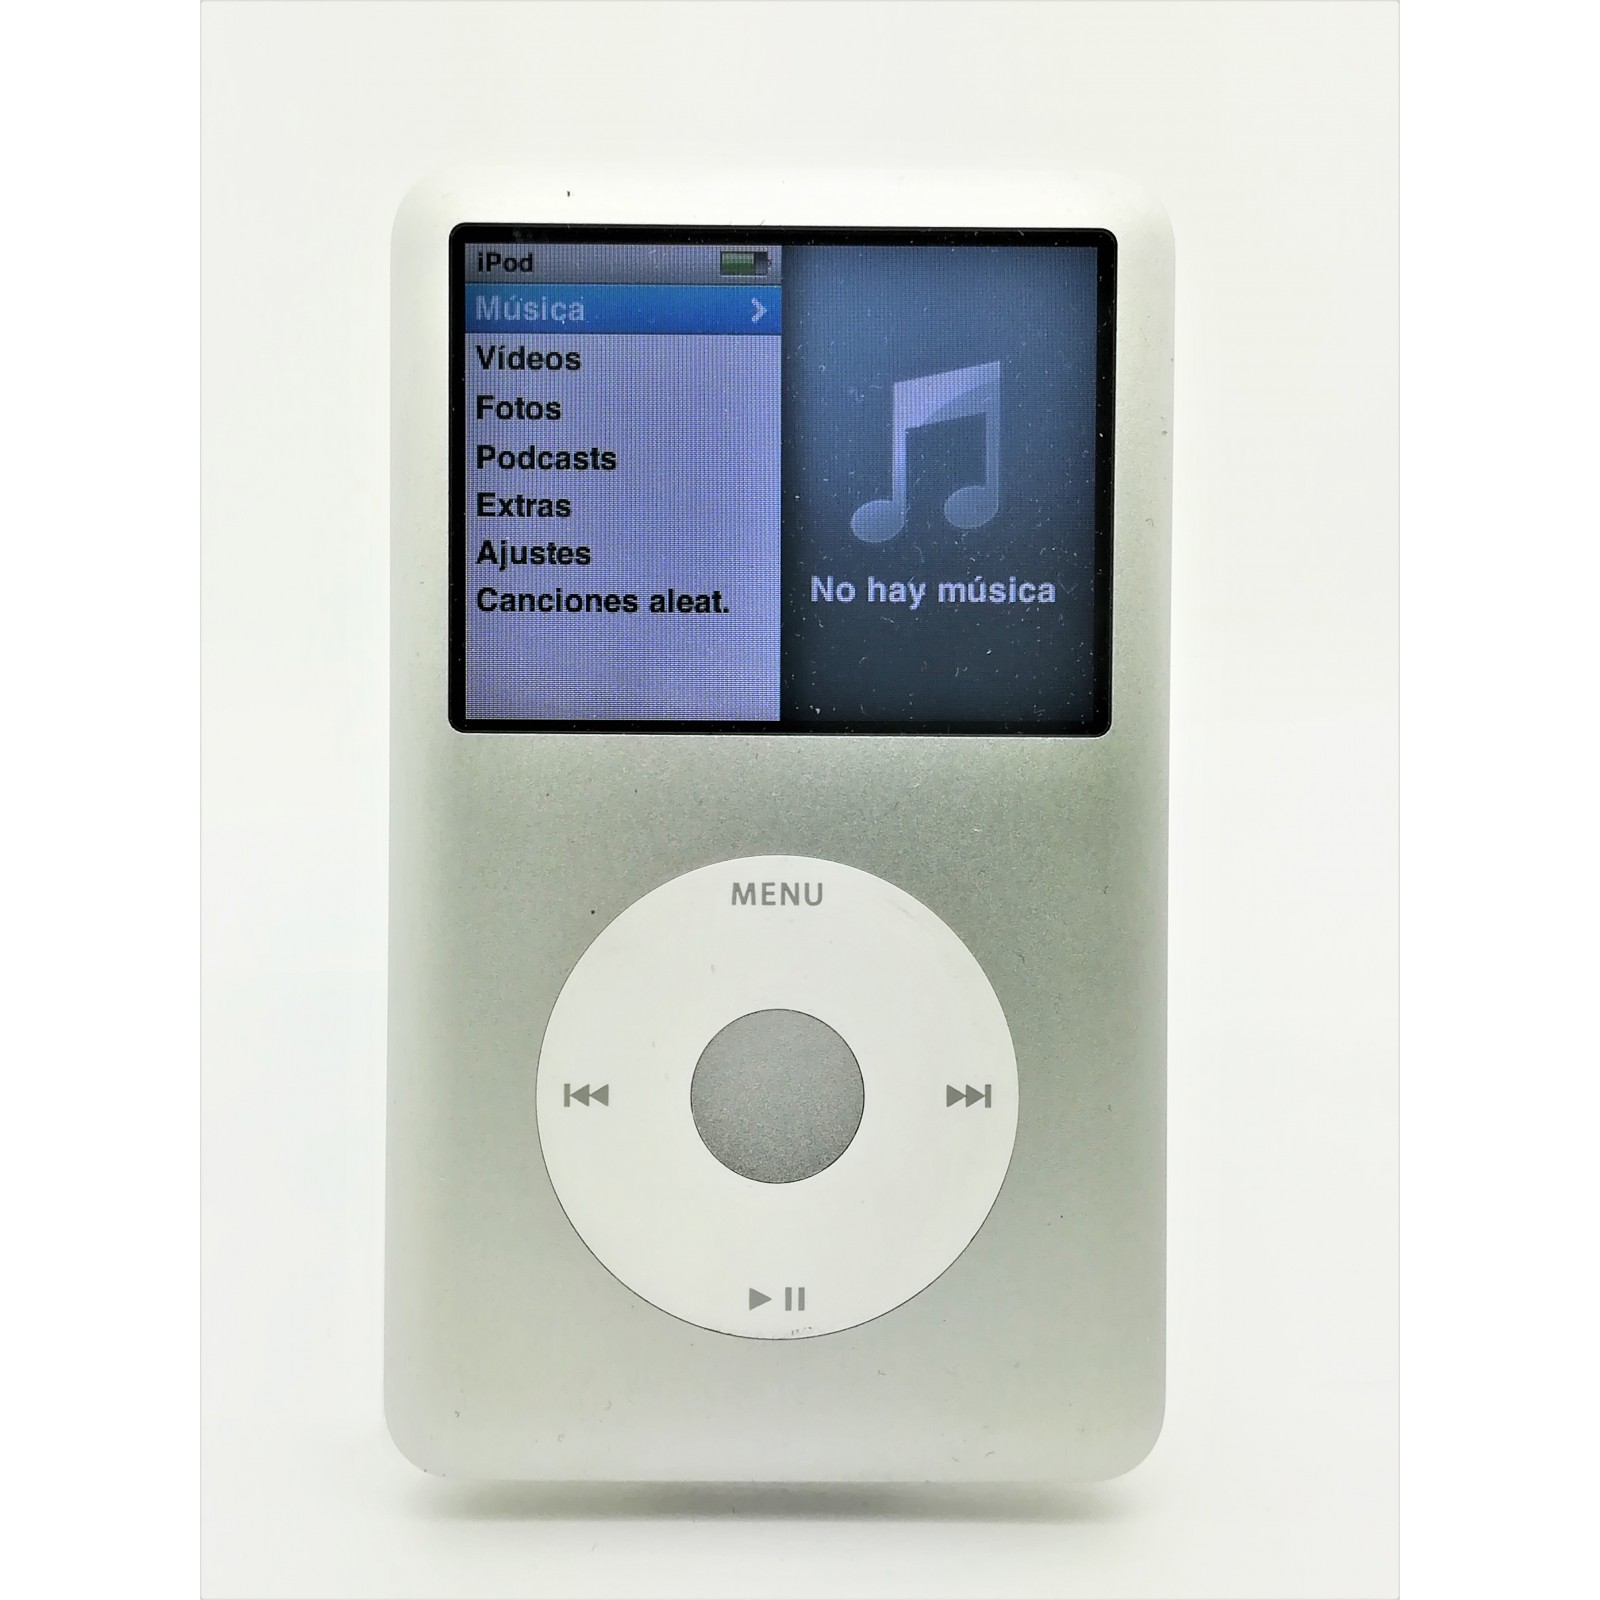 iPod classic 80GB - ポータブルプレーヤー